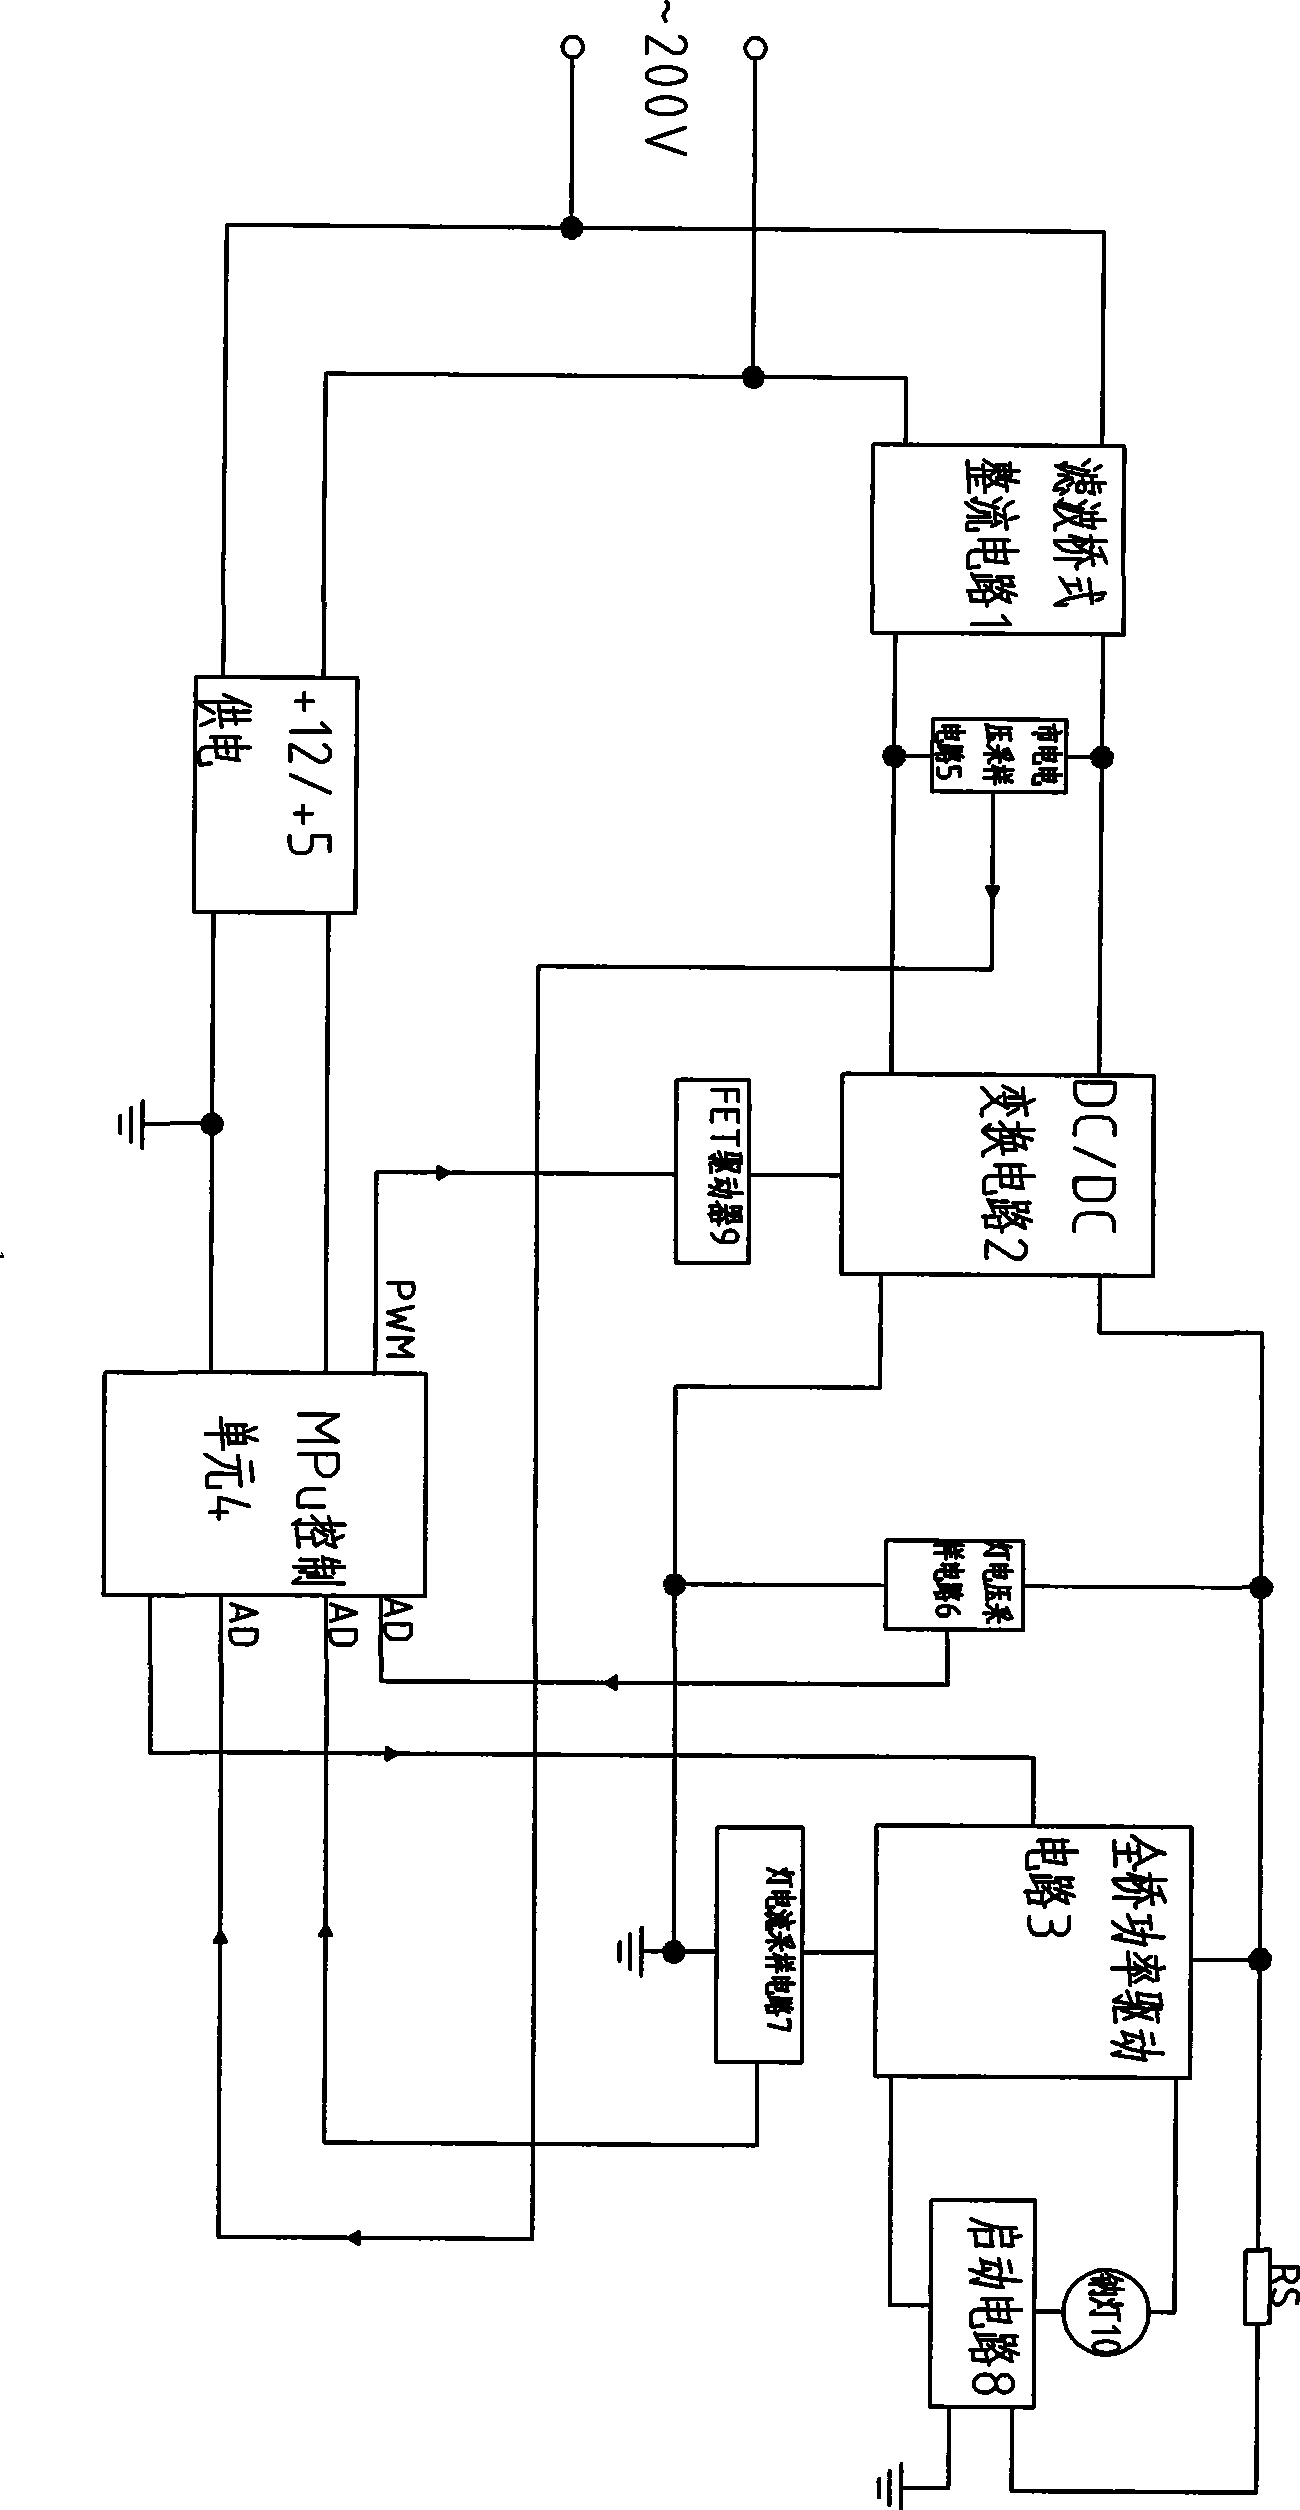 Control method for digital high voltage sodium lamp electronic ballast